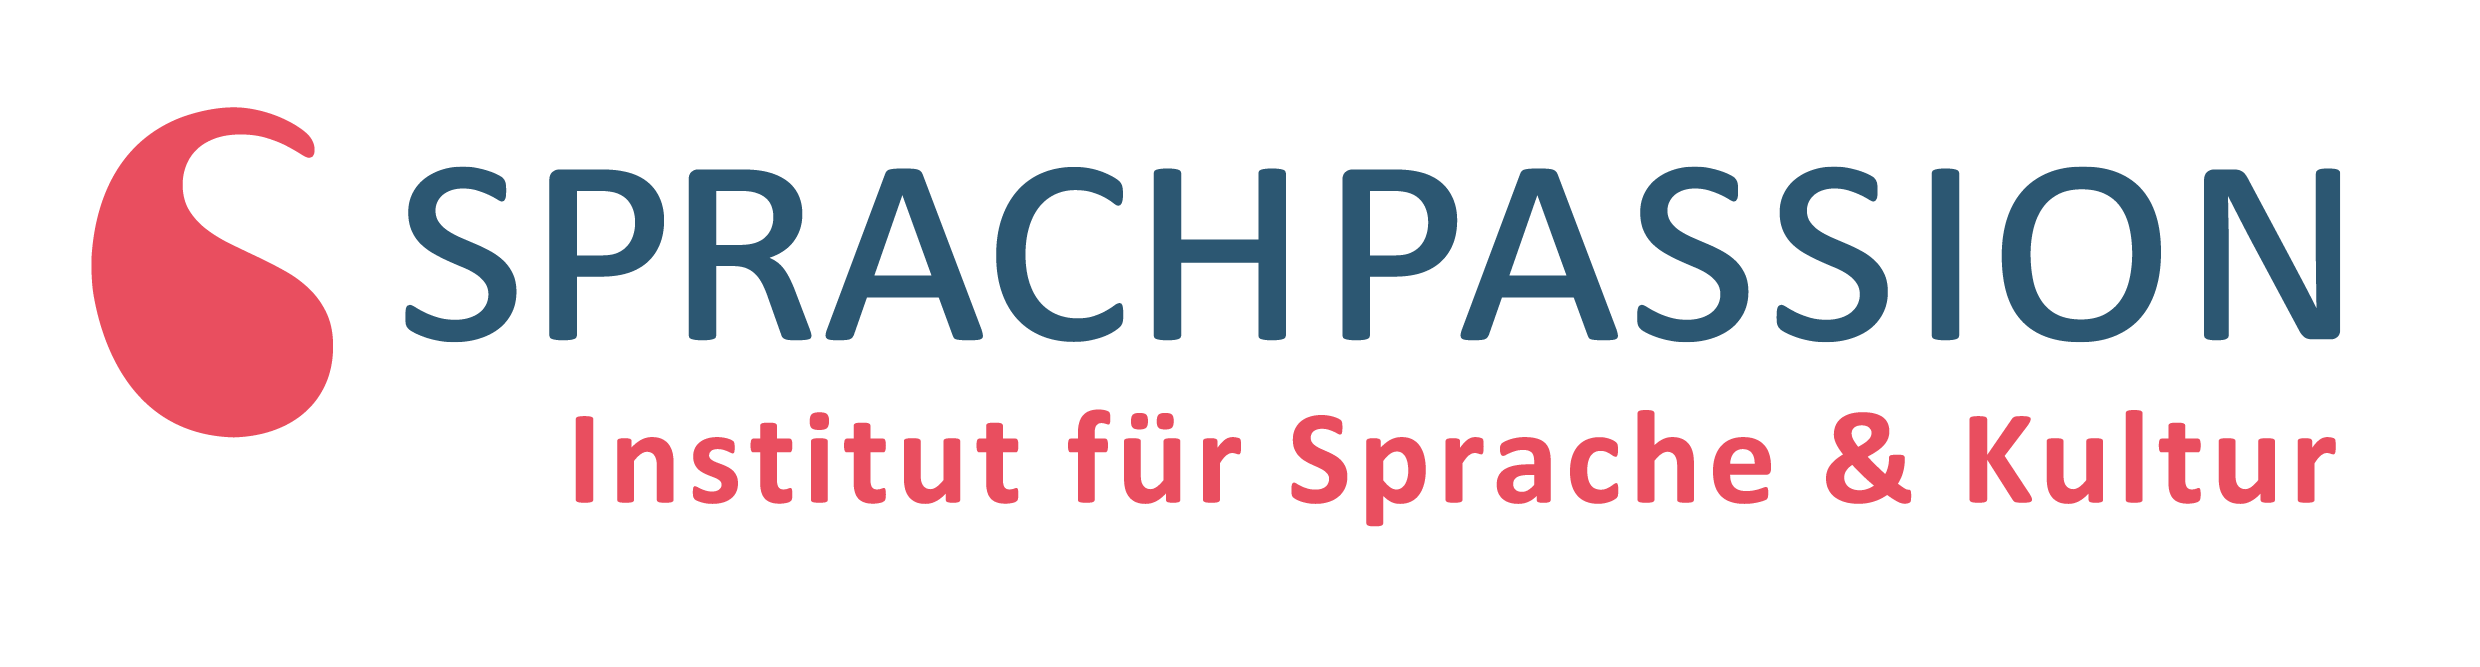 Sprachpassion Logo Franziska Becker Sprachschule Frankfurt